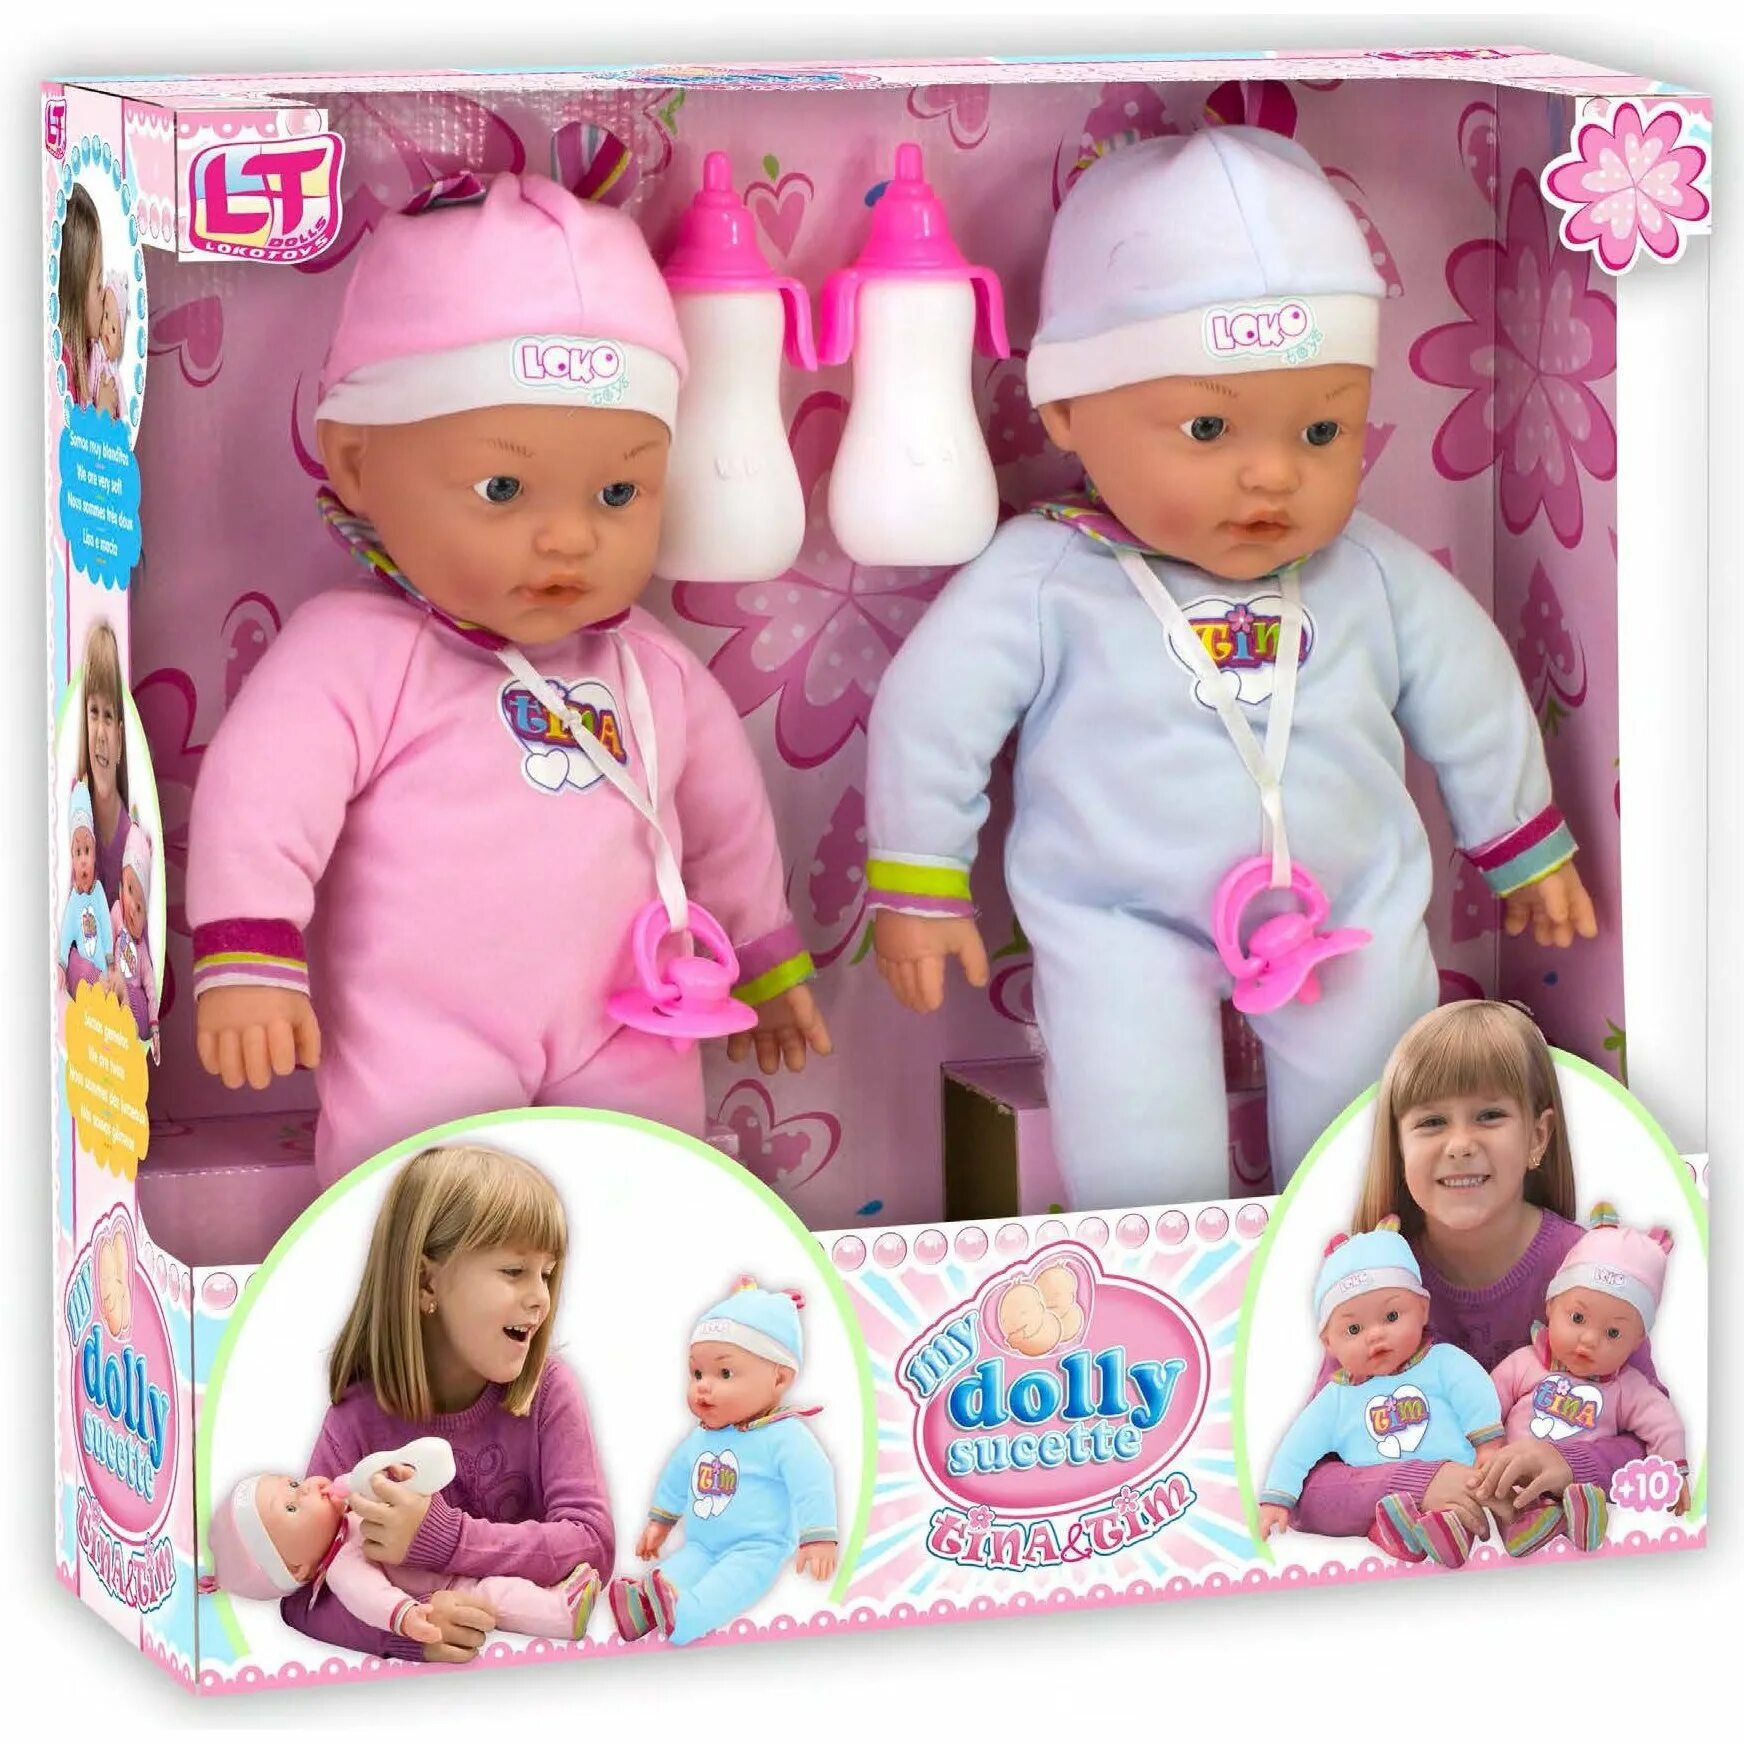 Где найти пупса. Loko Toys my Dolly sucette. Кукла пупс. Пупсы с наборами для малышей. Пупс девочка.